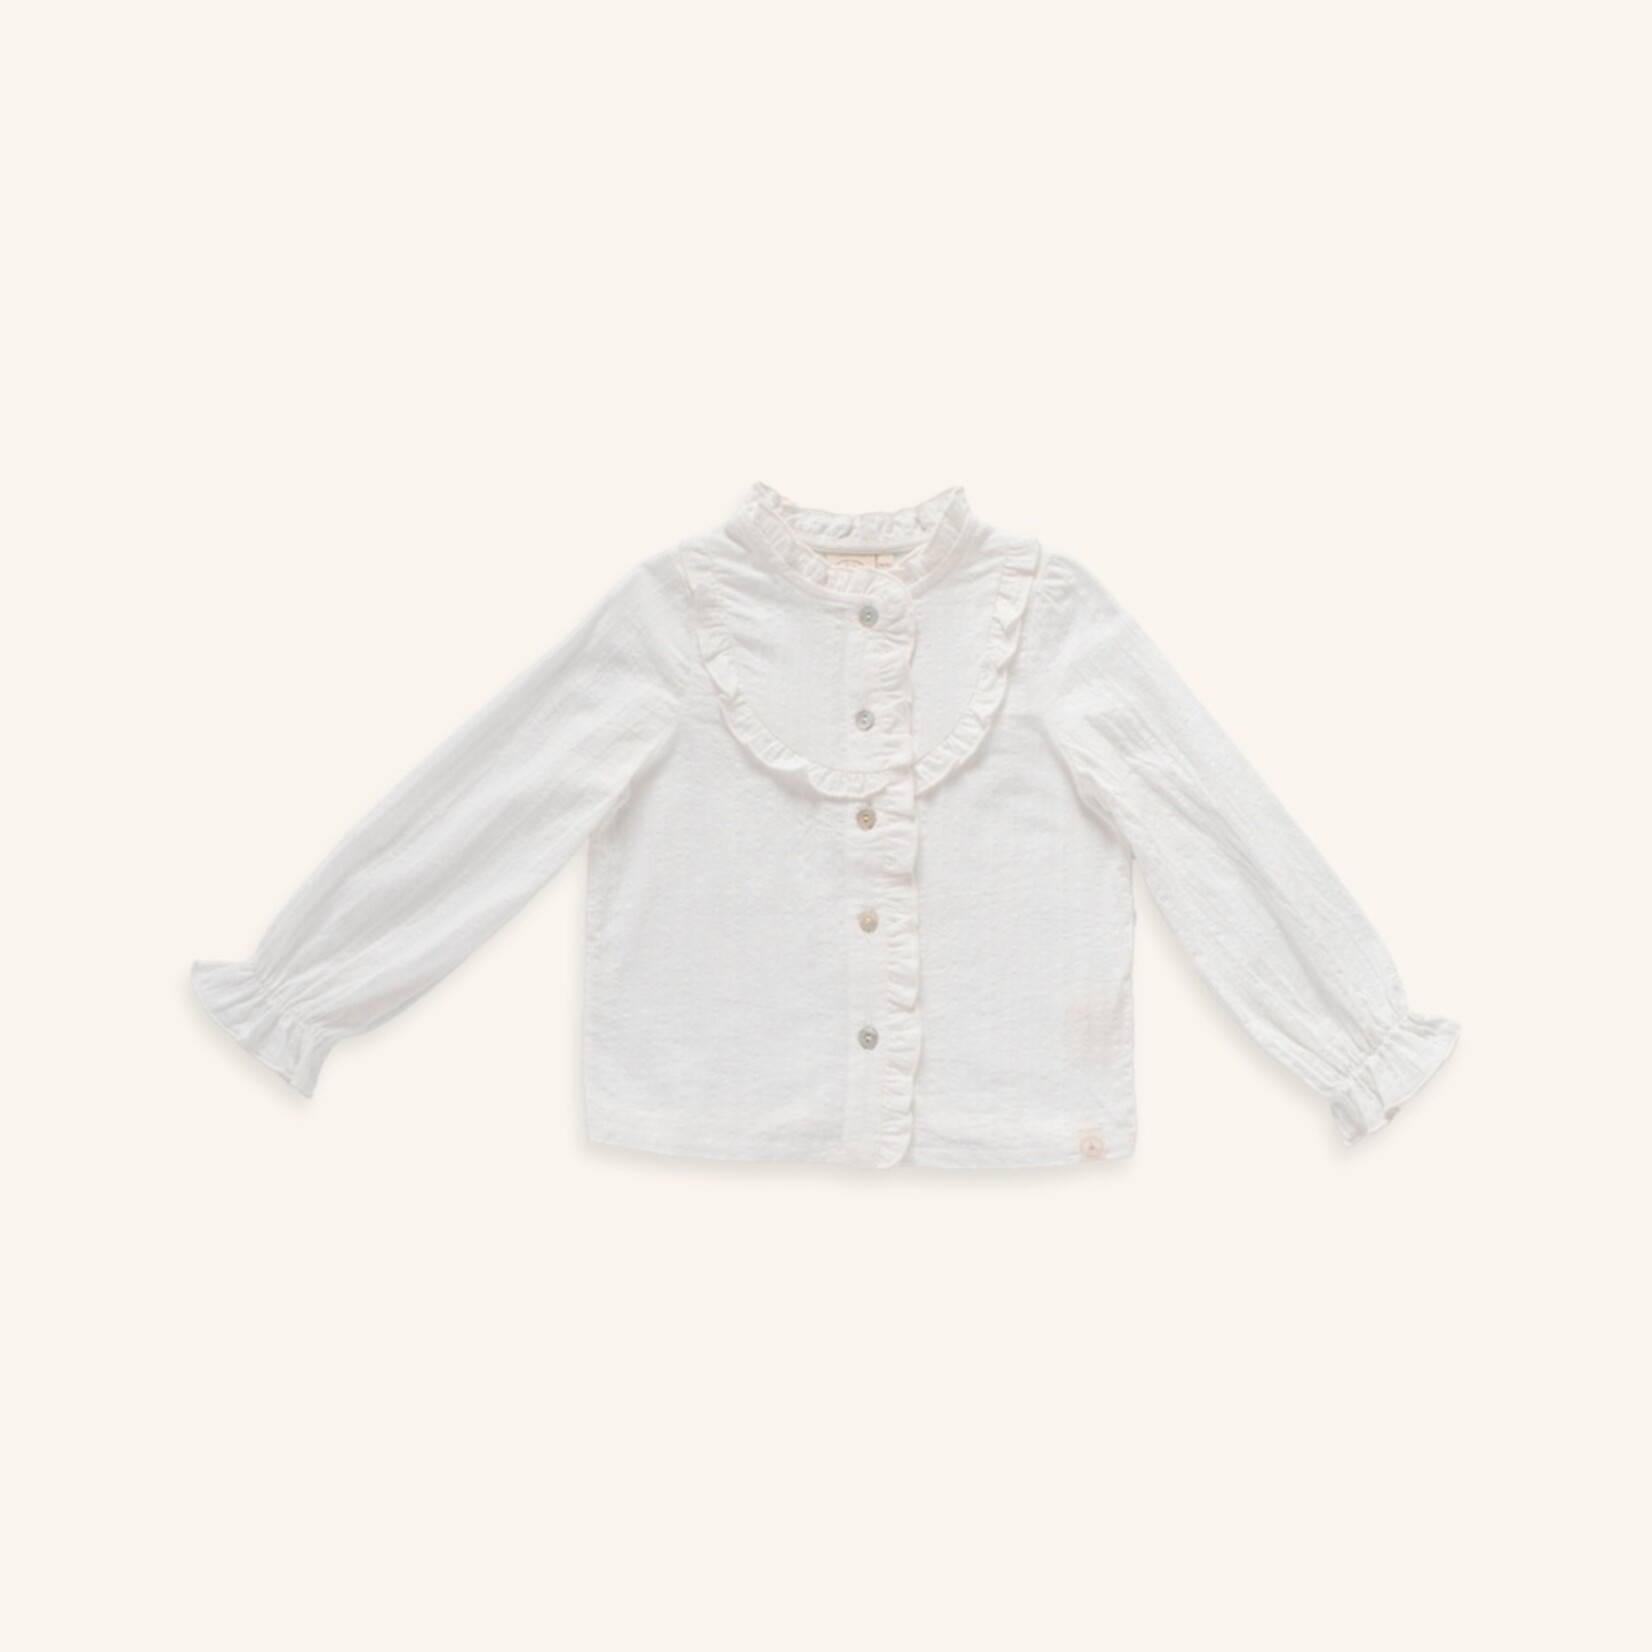 Ruffle blouse white embroidery